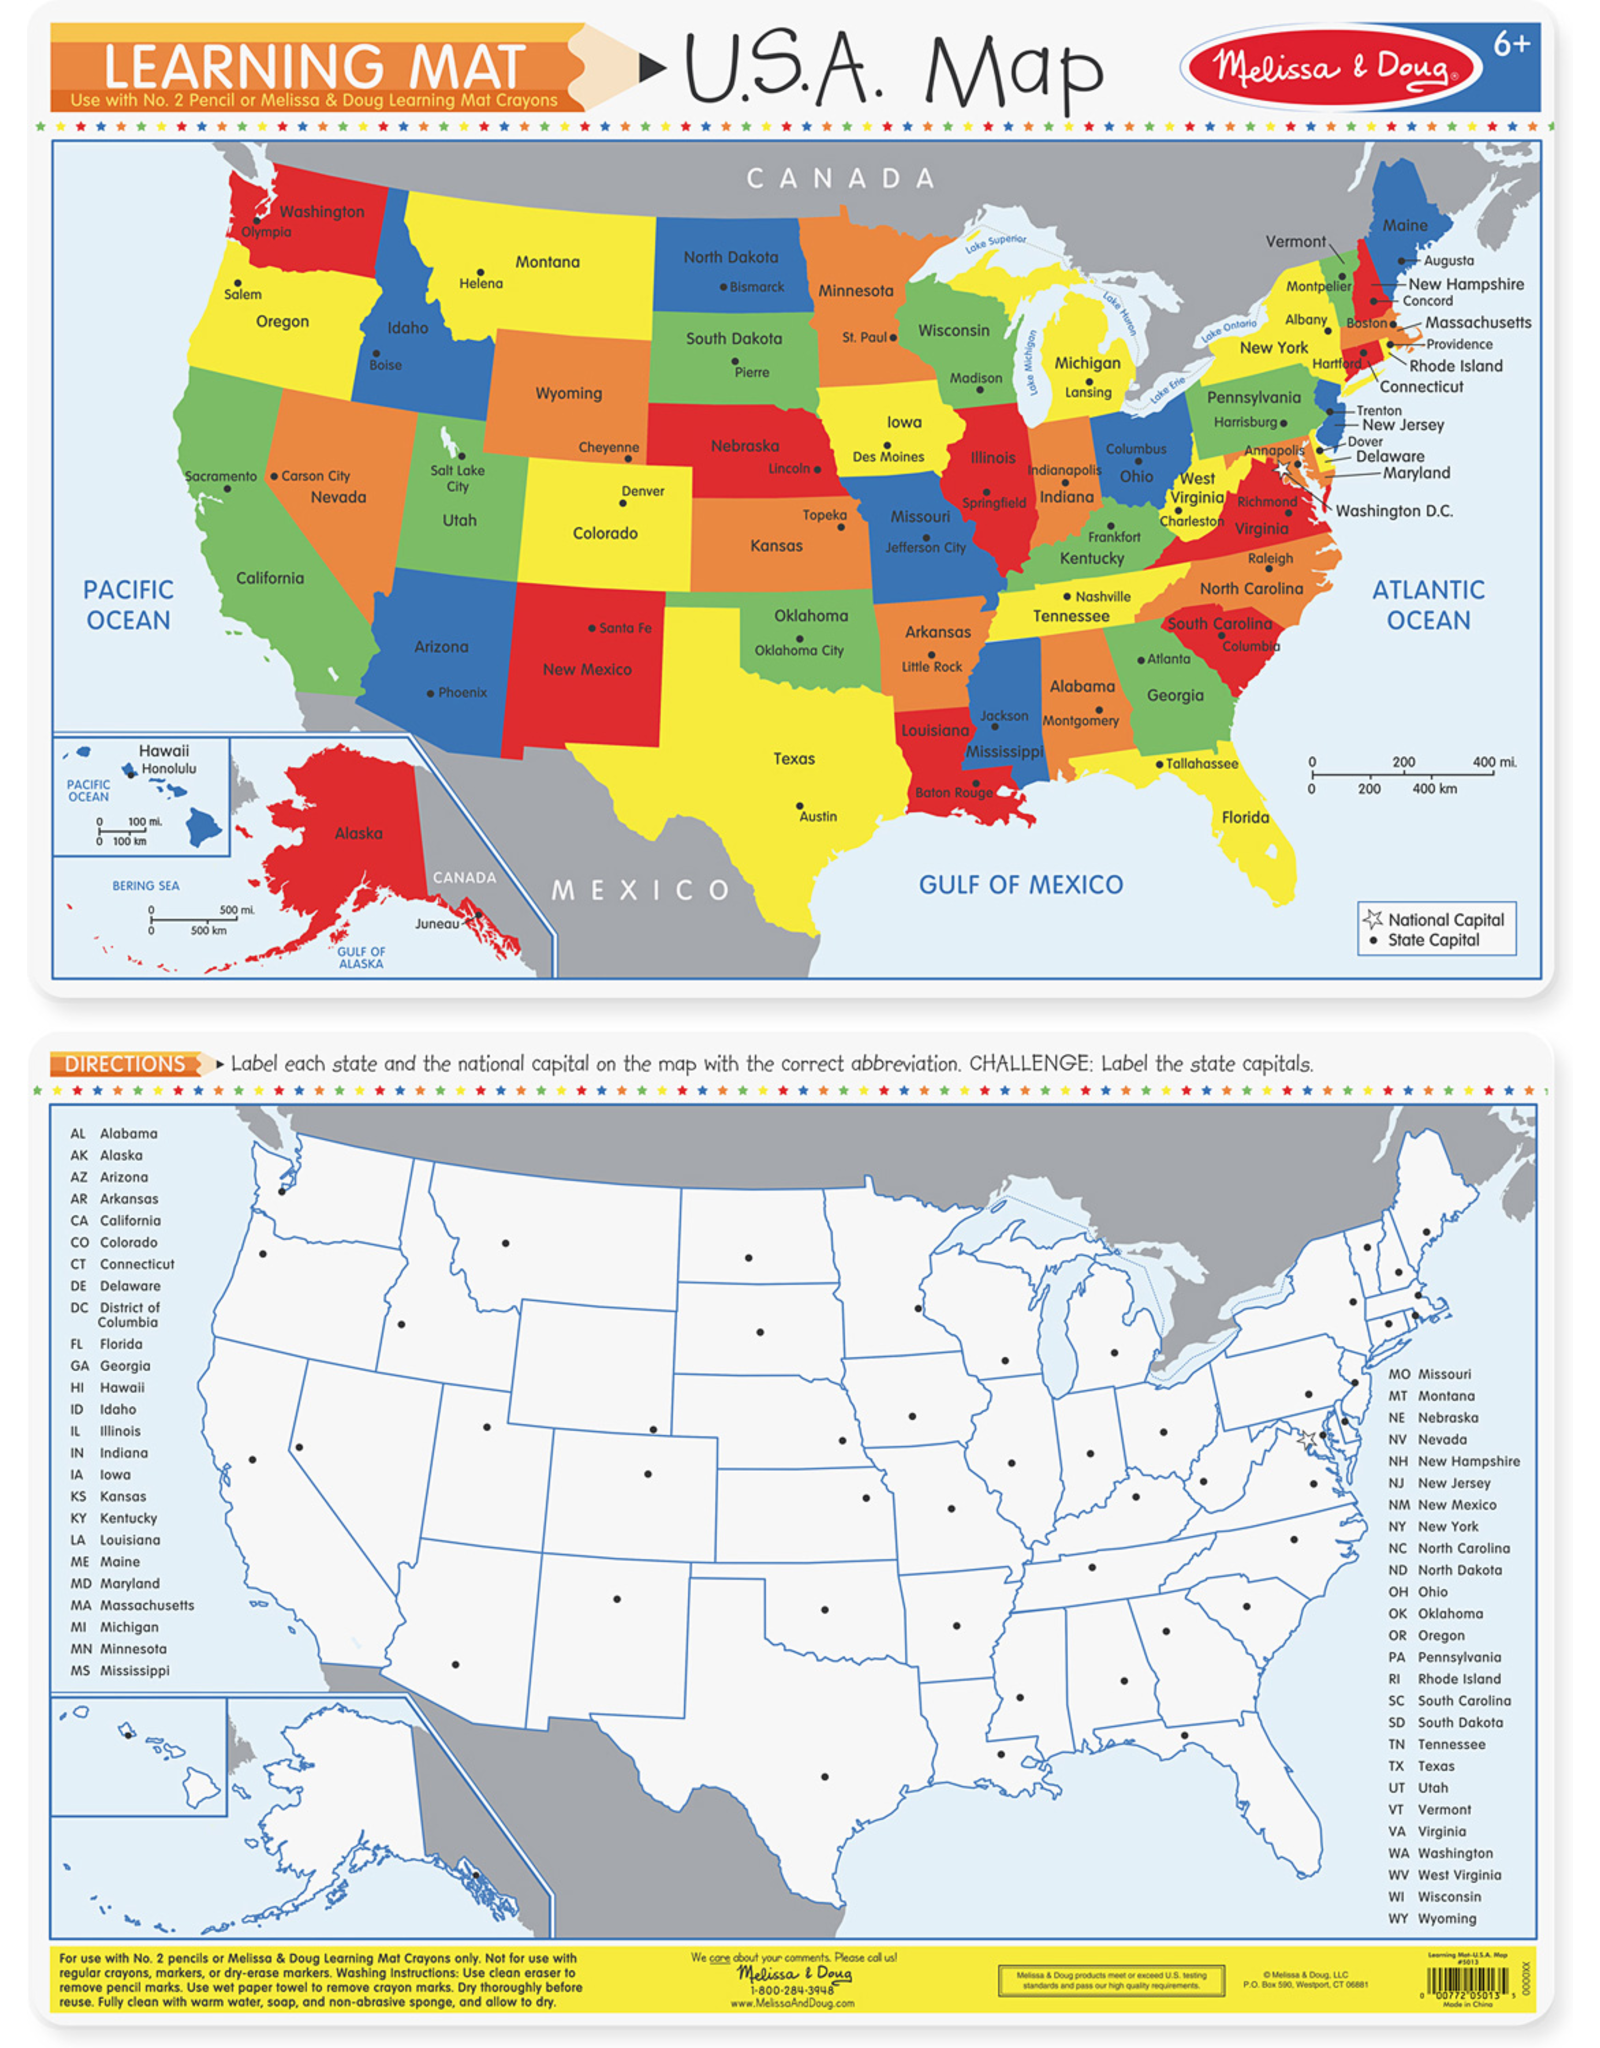 LEARNING MAT: USA MAP